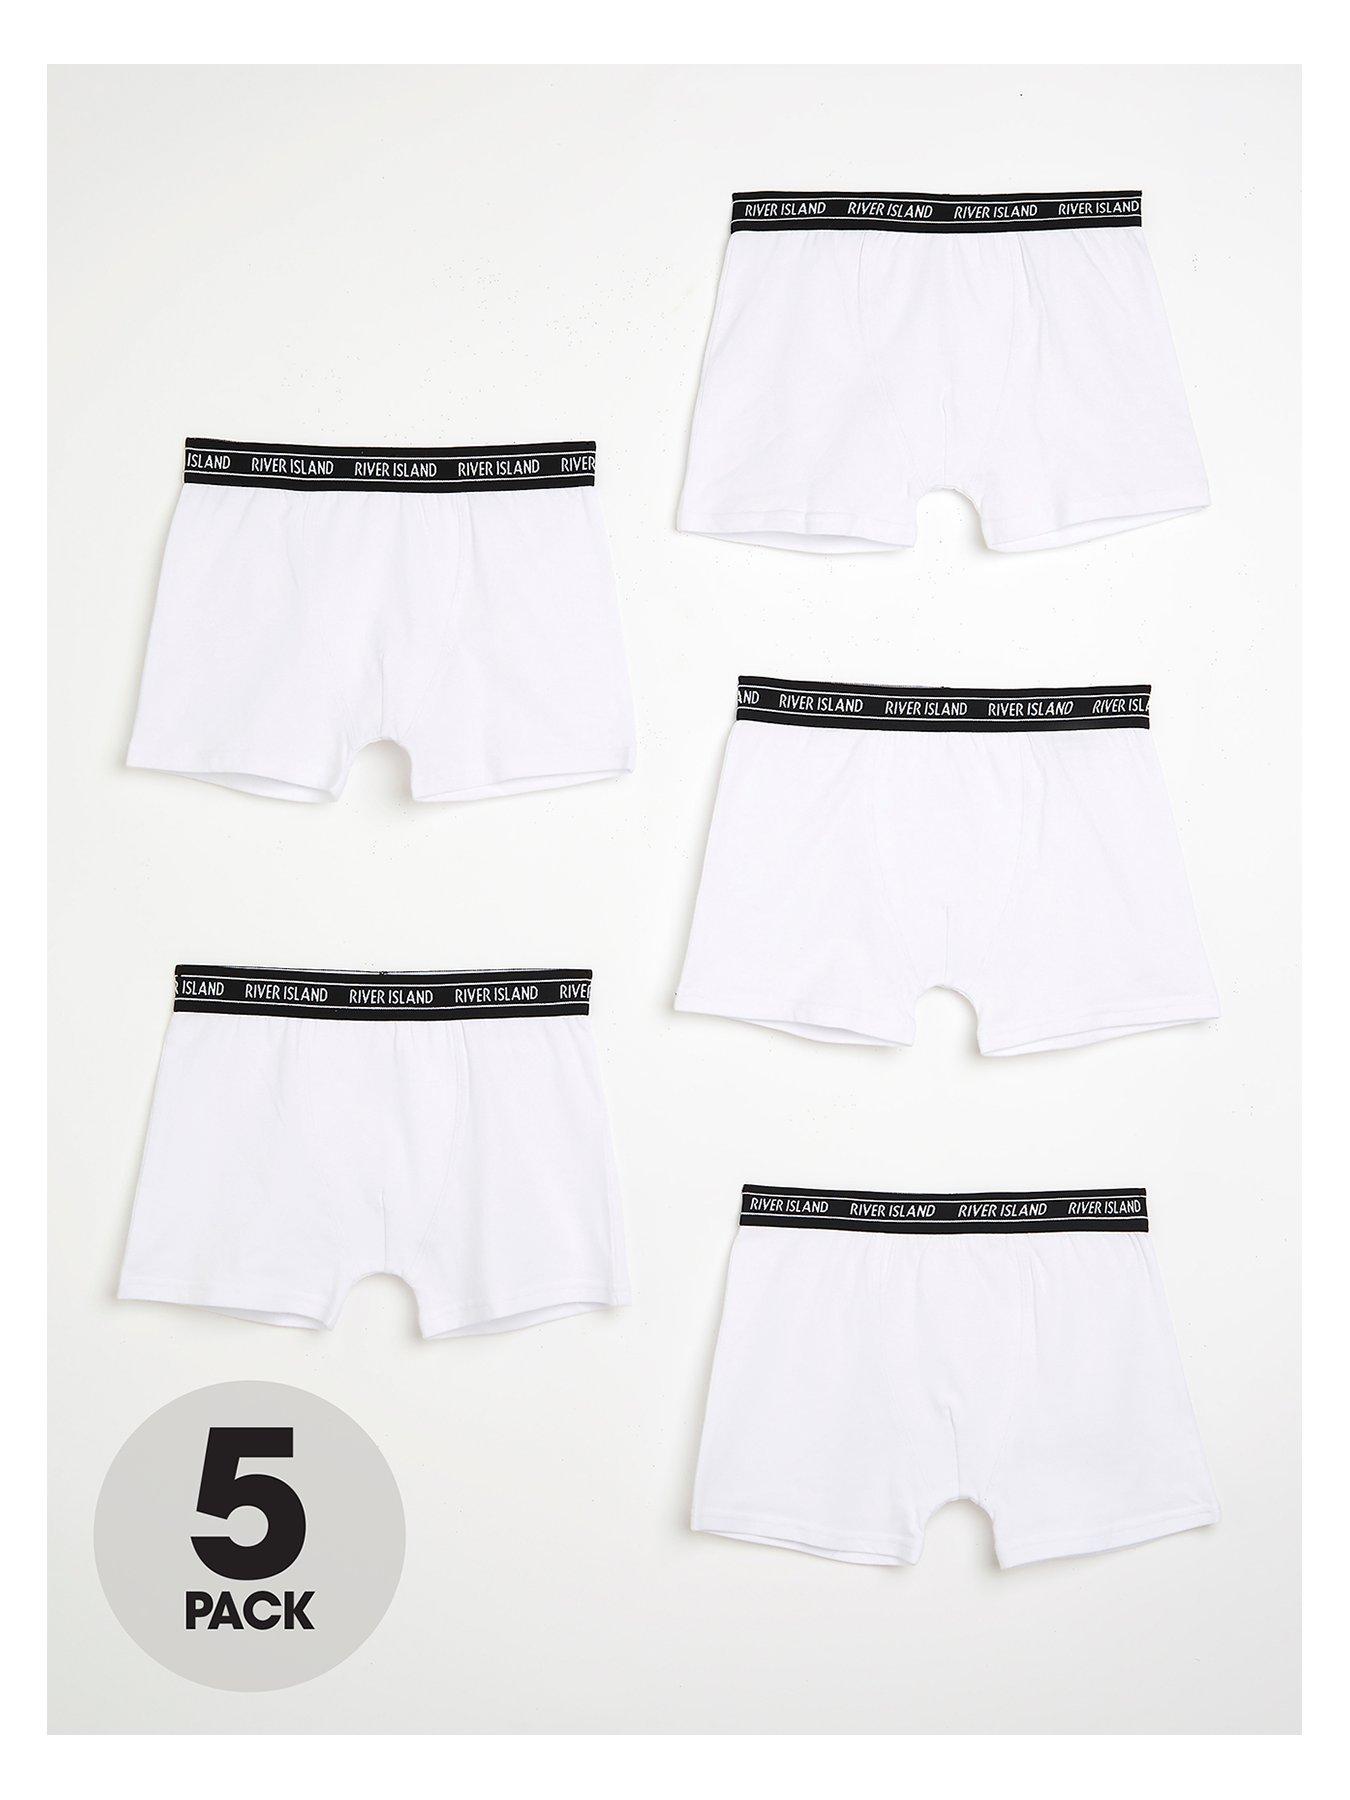 Boys 5 Pack briefs & trainer socks Set Sizes 3-4yrs Clothing Boys Clothing Underwear to 5-6yrs | 